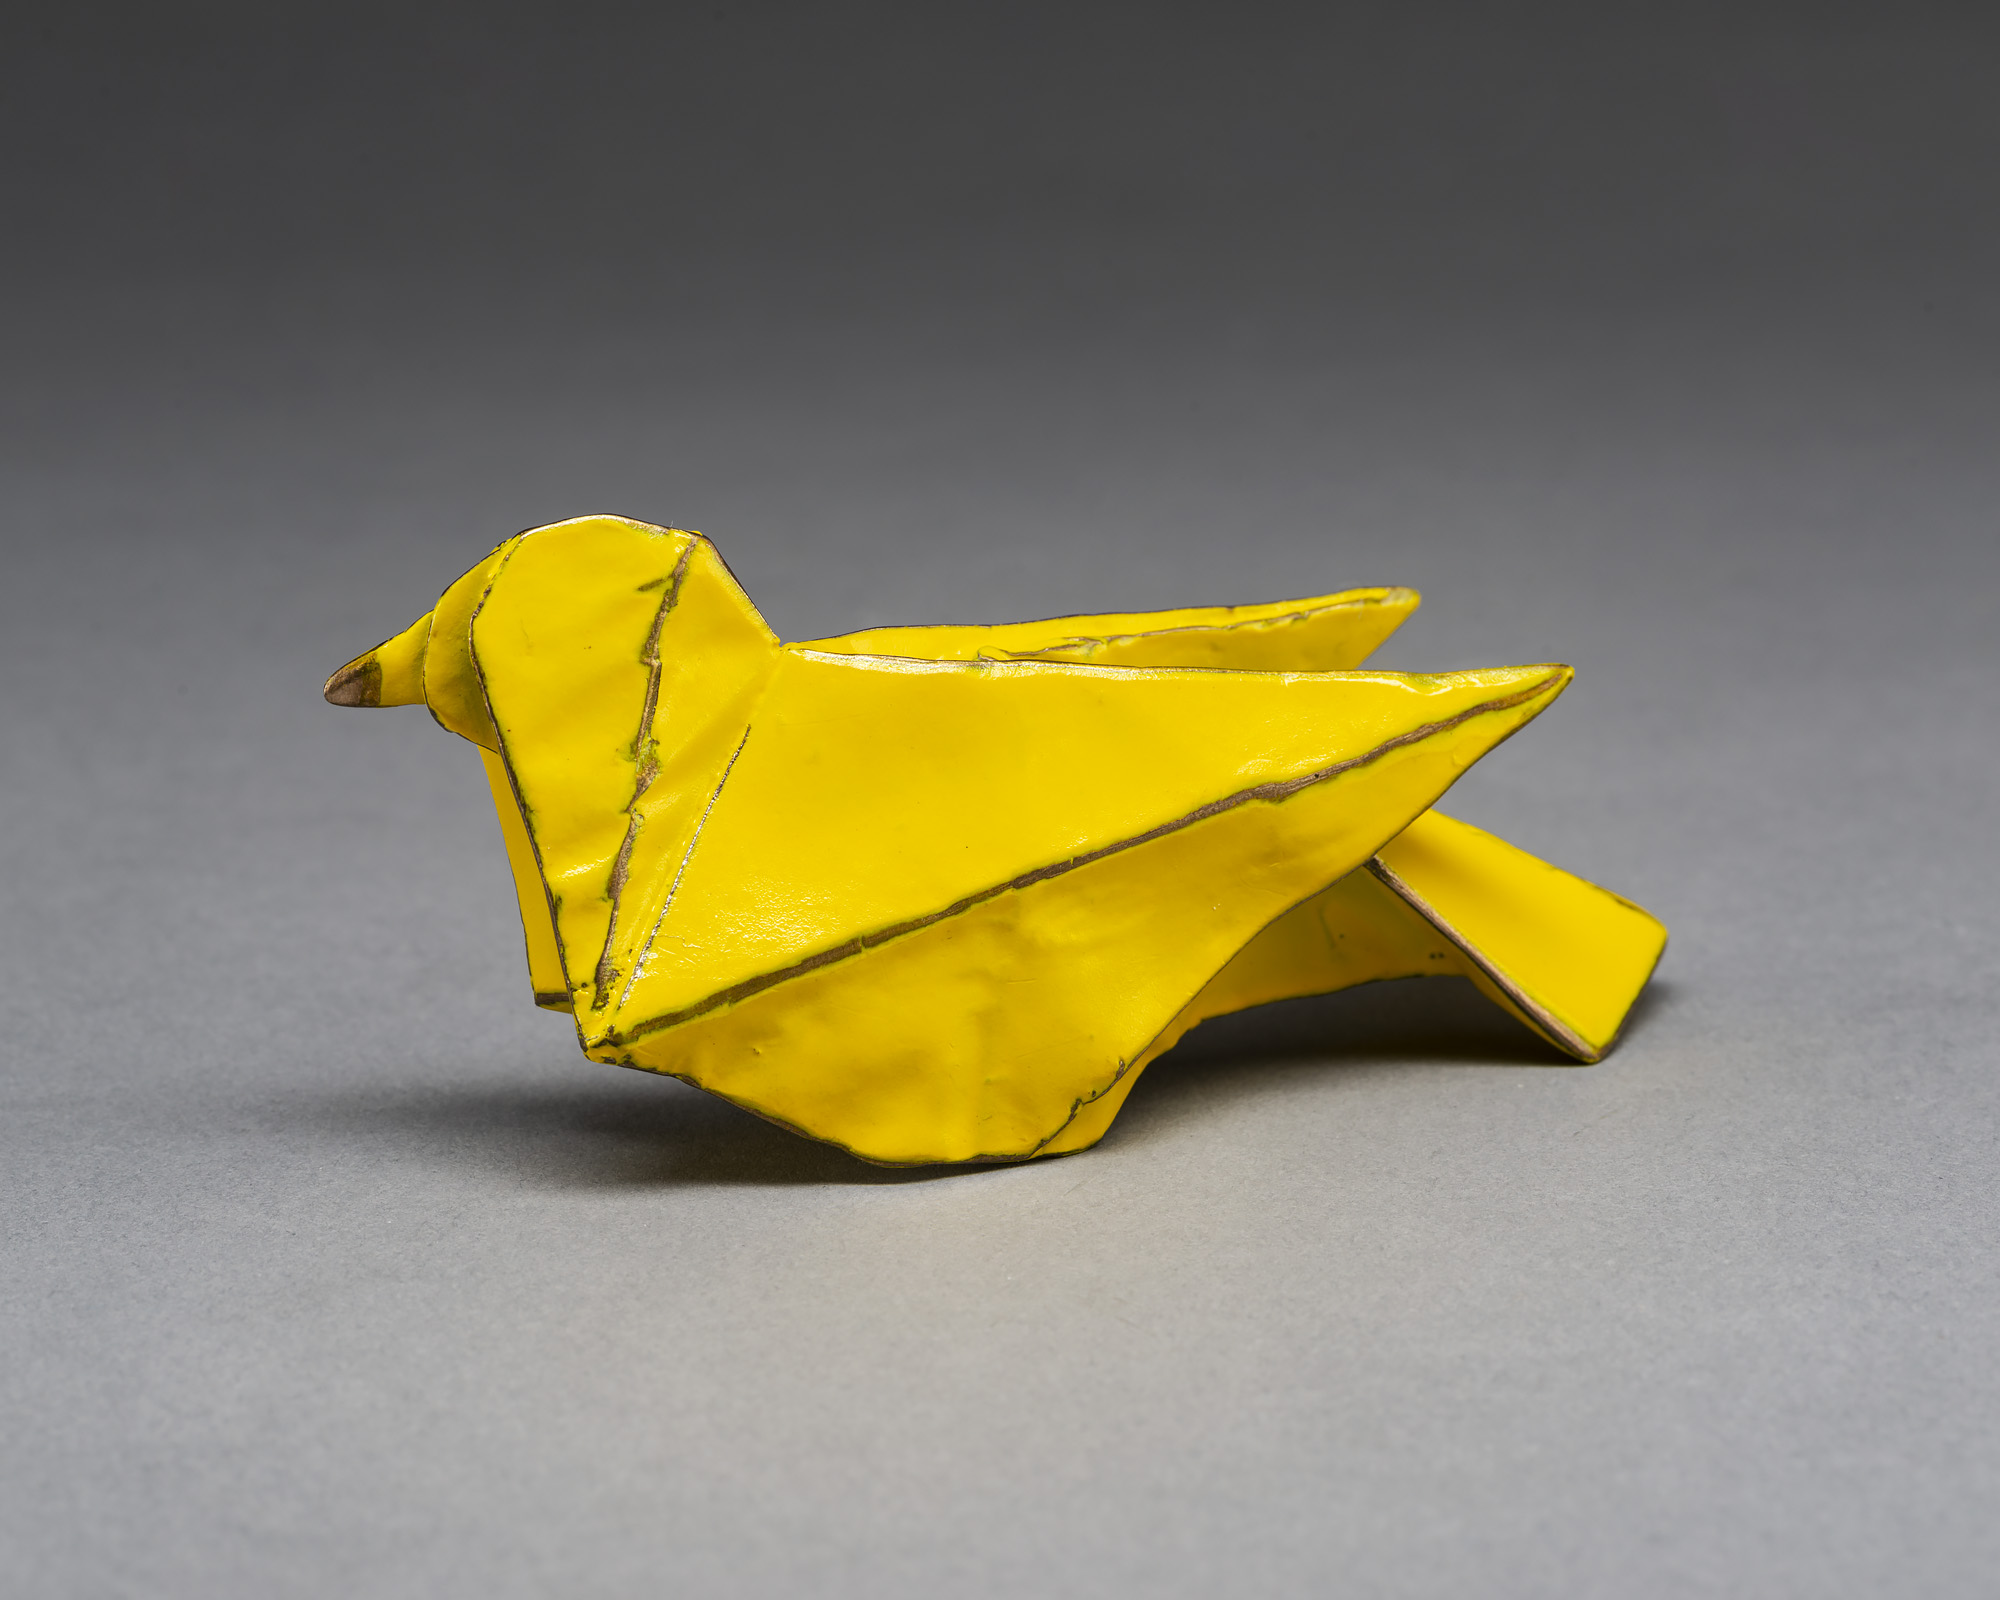 Yellow origami bird sculpture